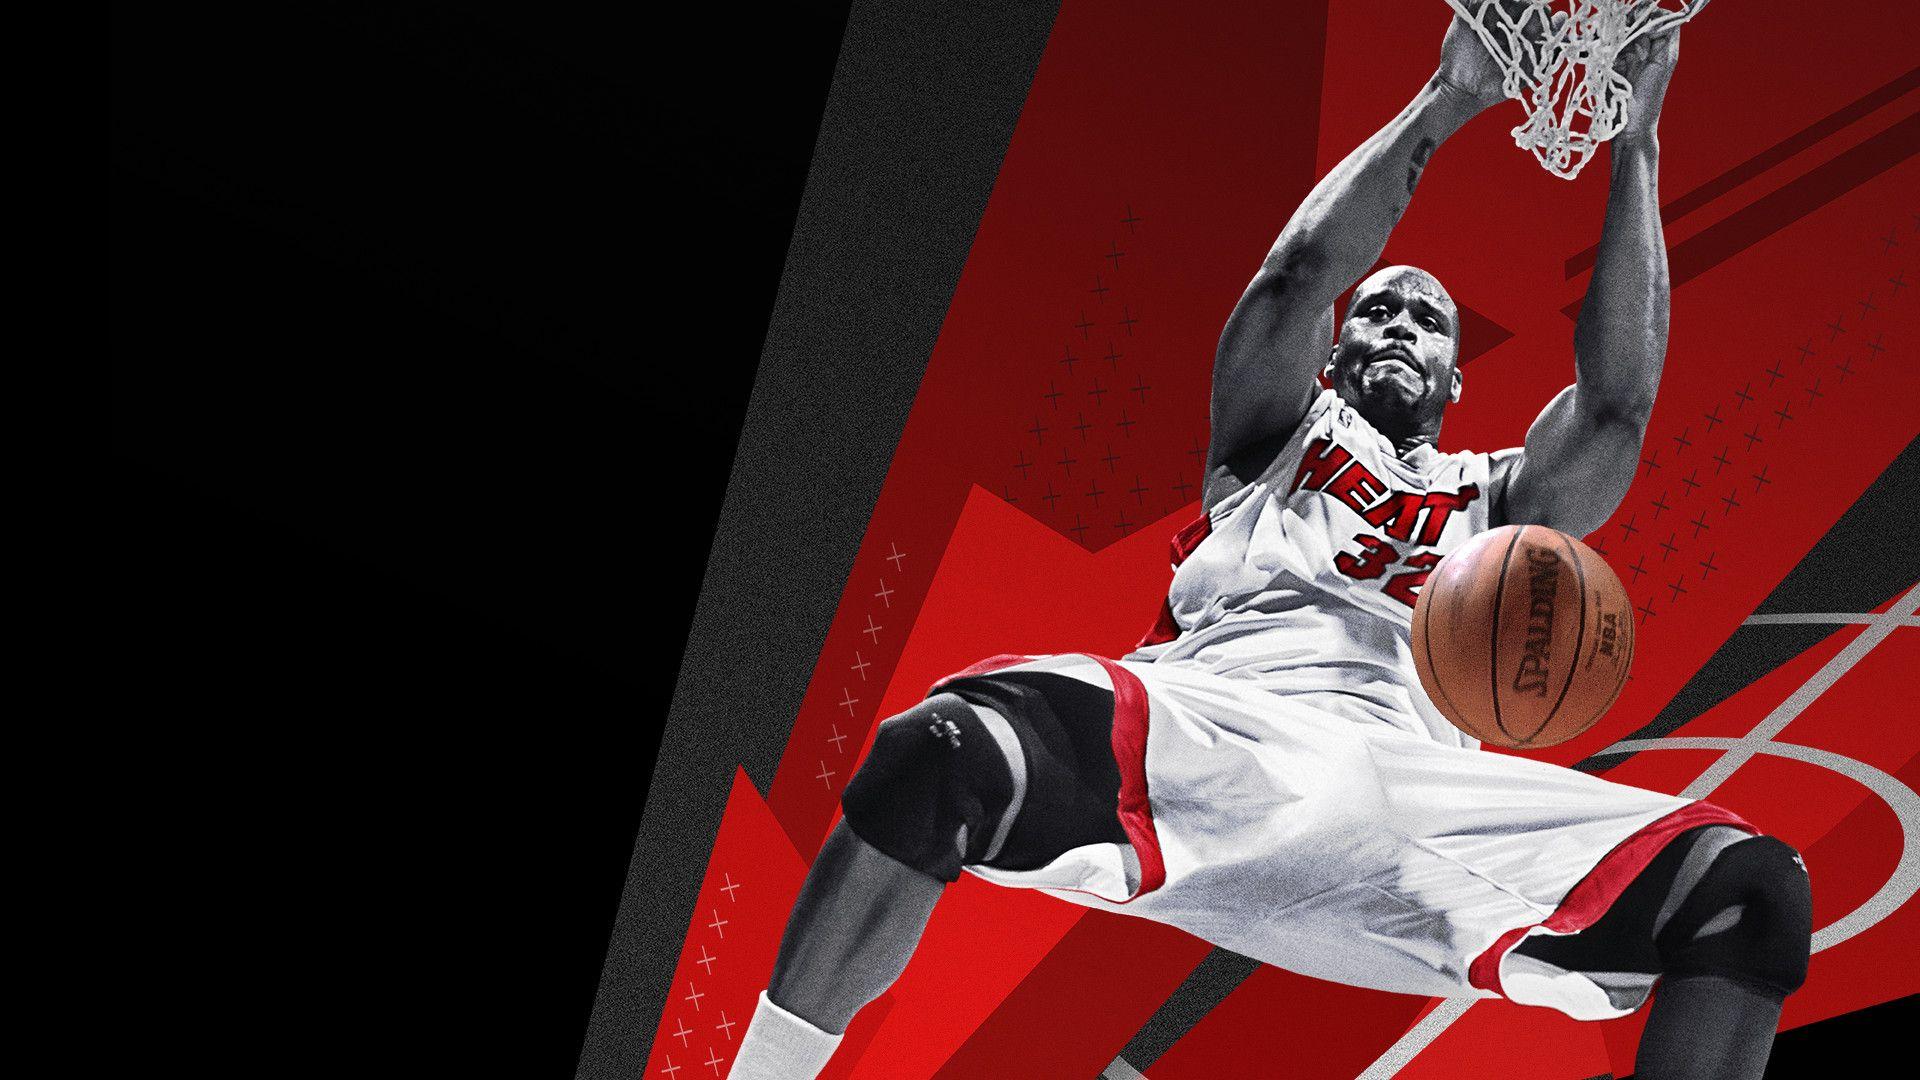 NBA Desktop Wallpaper Free NBA Desktop Background